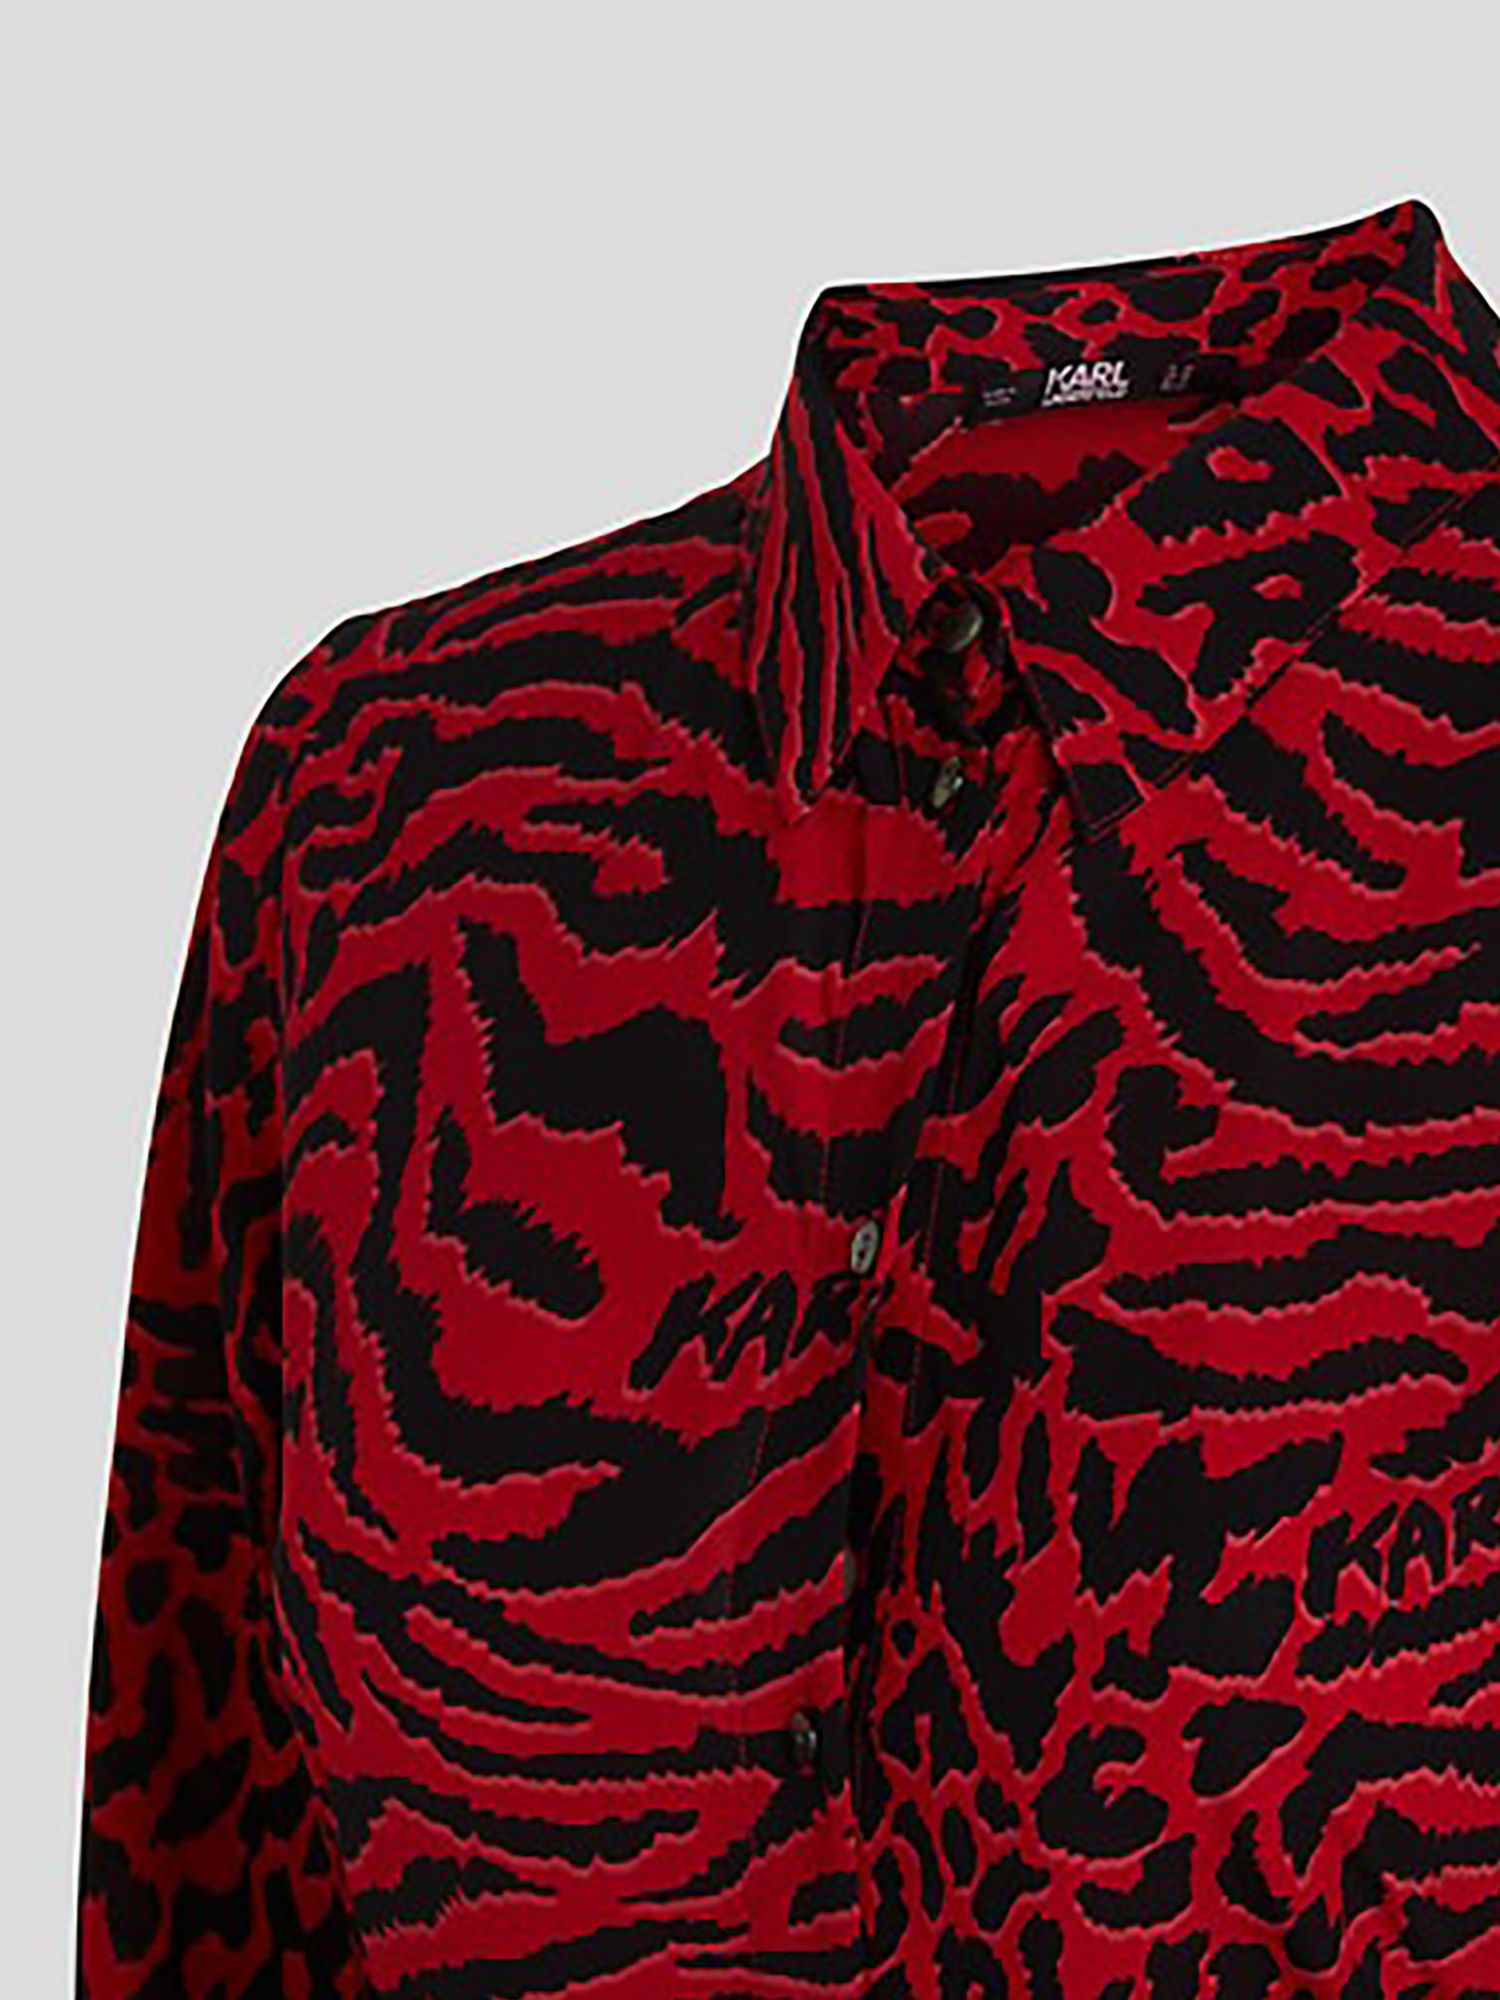 KARL LAGERFELD Animal Shirt Dress, Red/Multi, 6